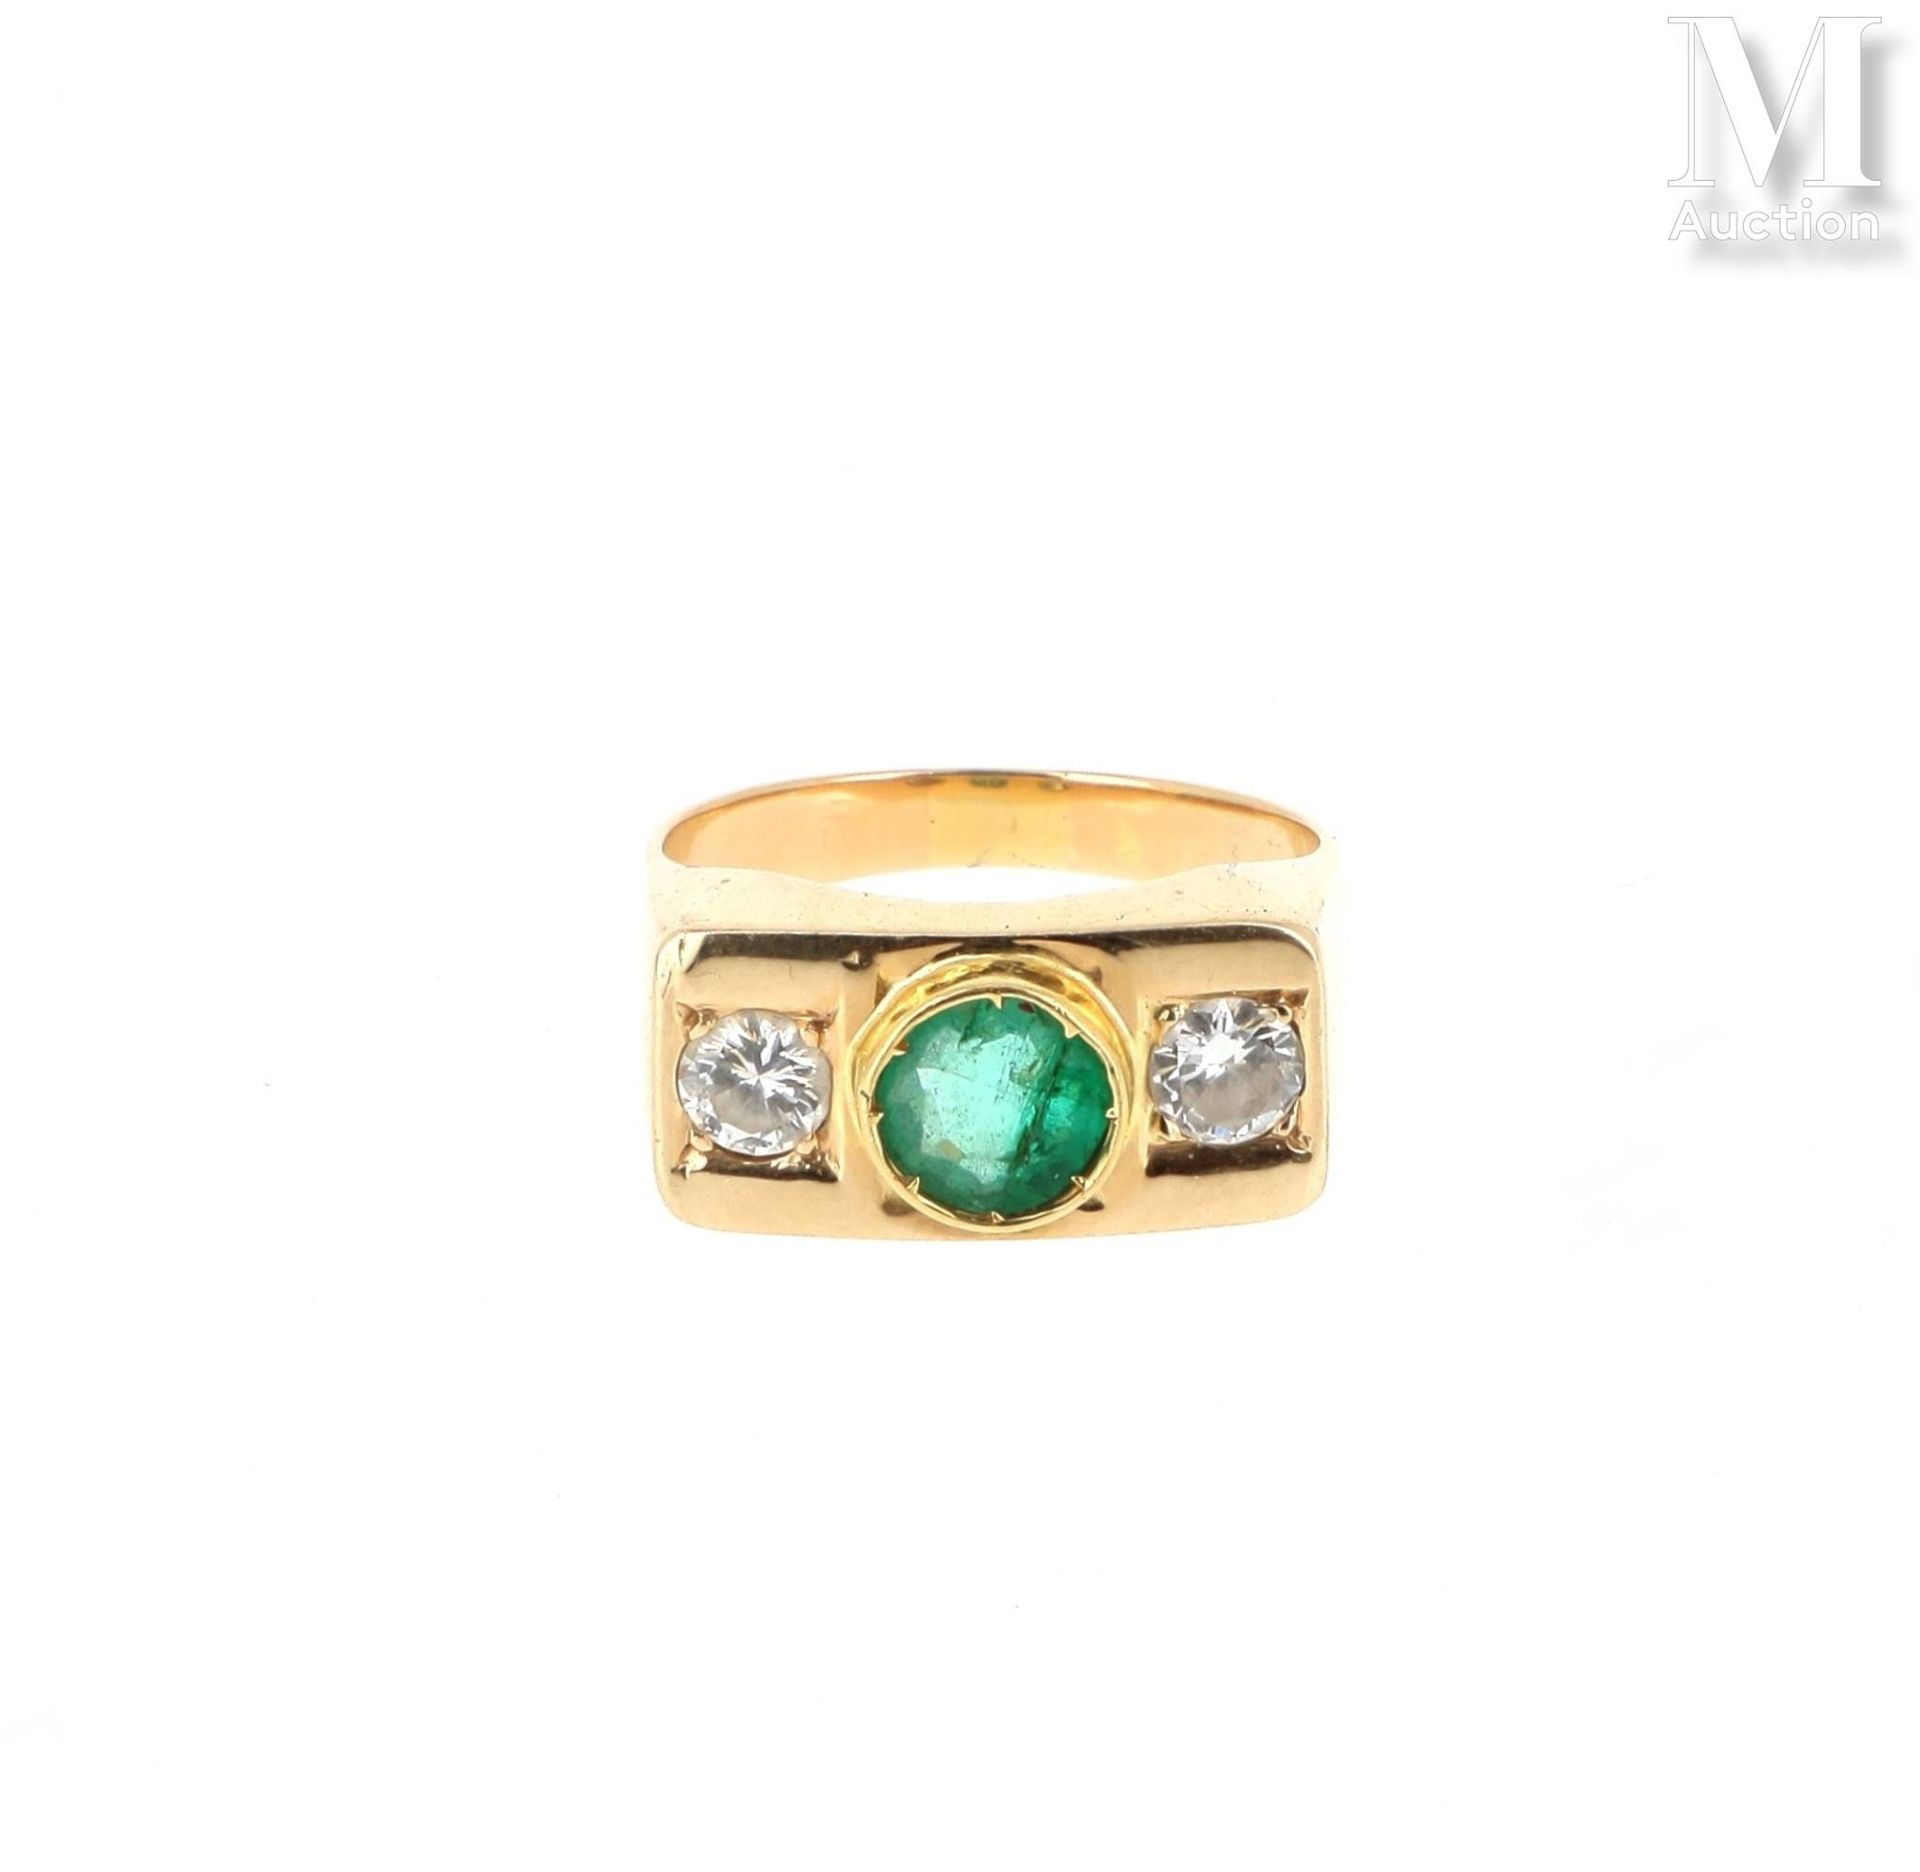 Bague émeraude brillants 18K黄金（750°/°）戒指，镶有一颗圆形祖母绿（碎裂）和两颗钻石，封闭式镶嵌。 
毛重：9.1克。
TD &hellip;